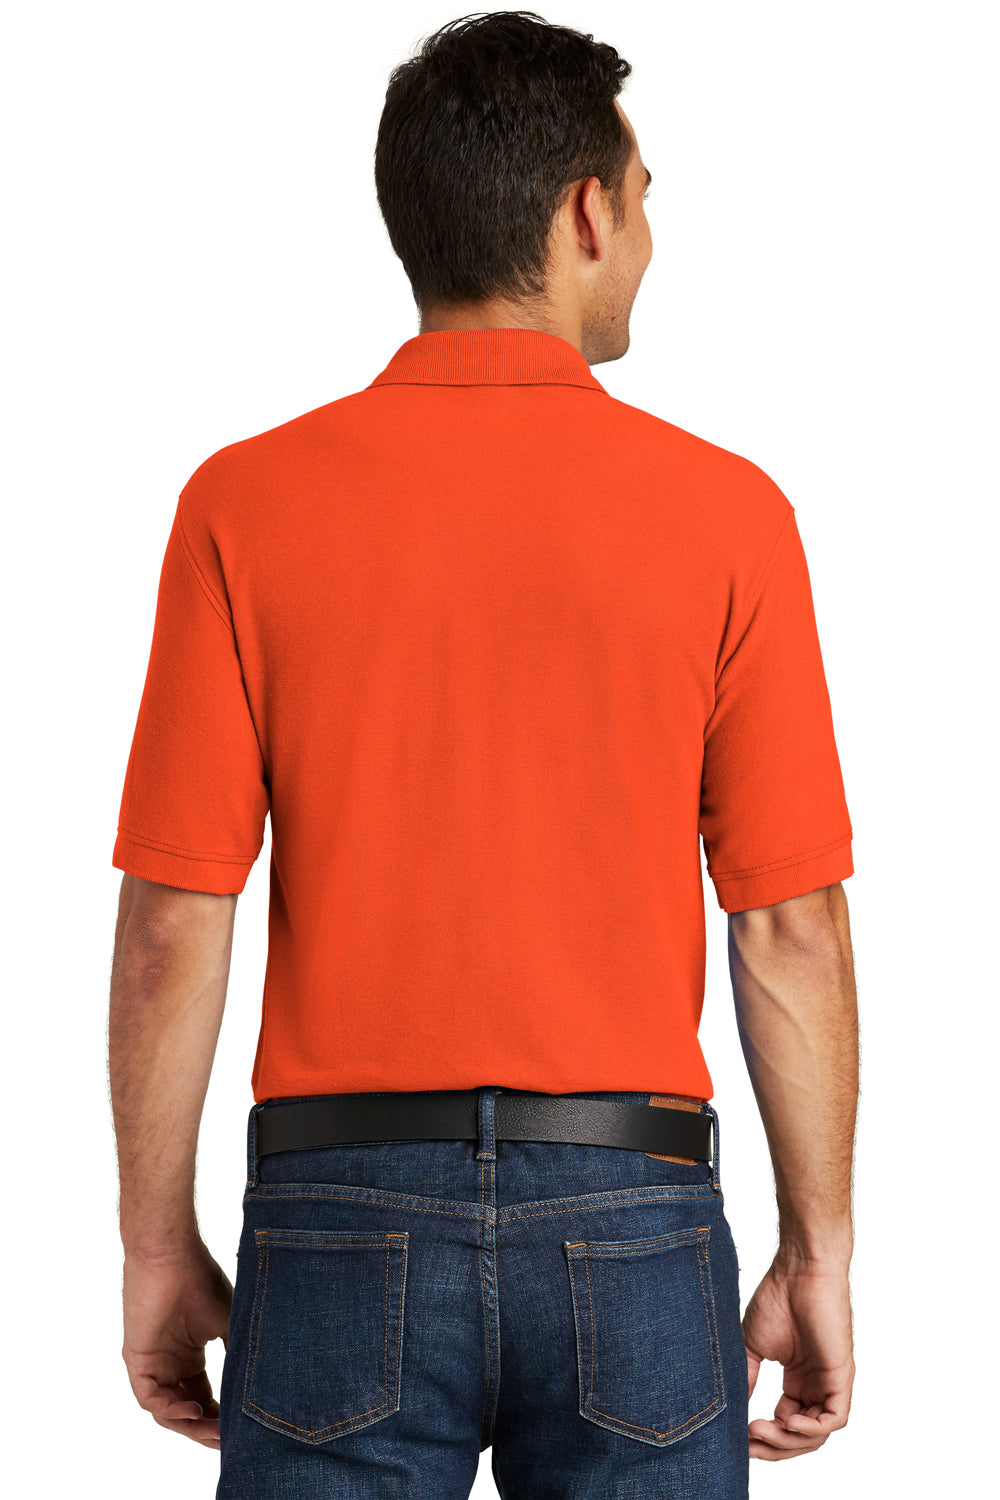 Port & Company KP155 Mens Core Stain Resistant Short Sleeve Polo Shirt Orange Back